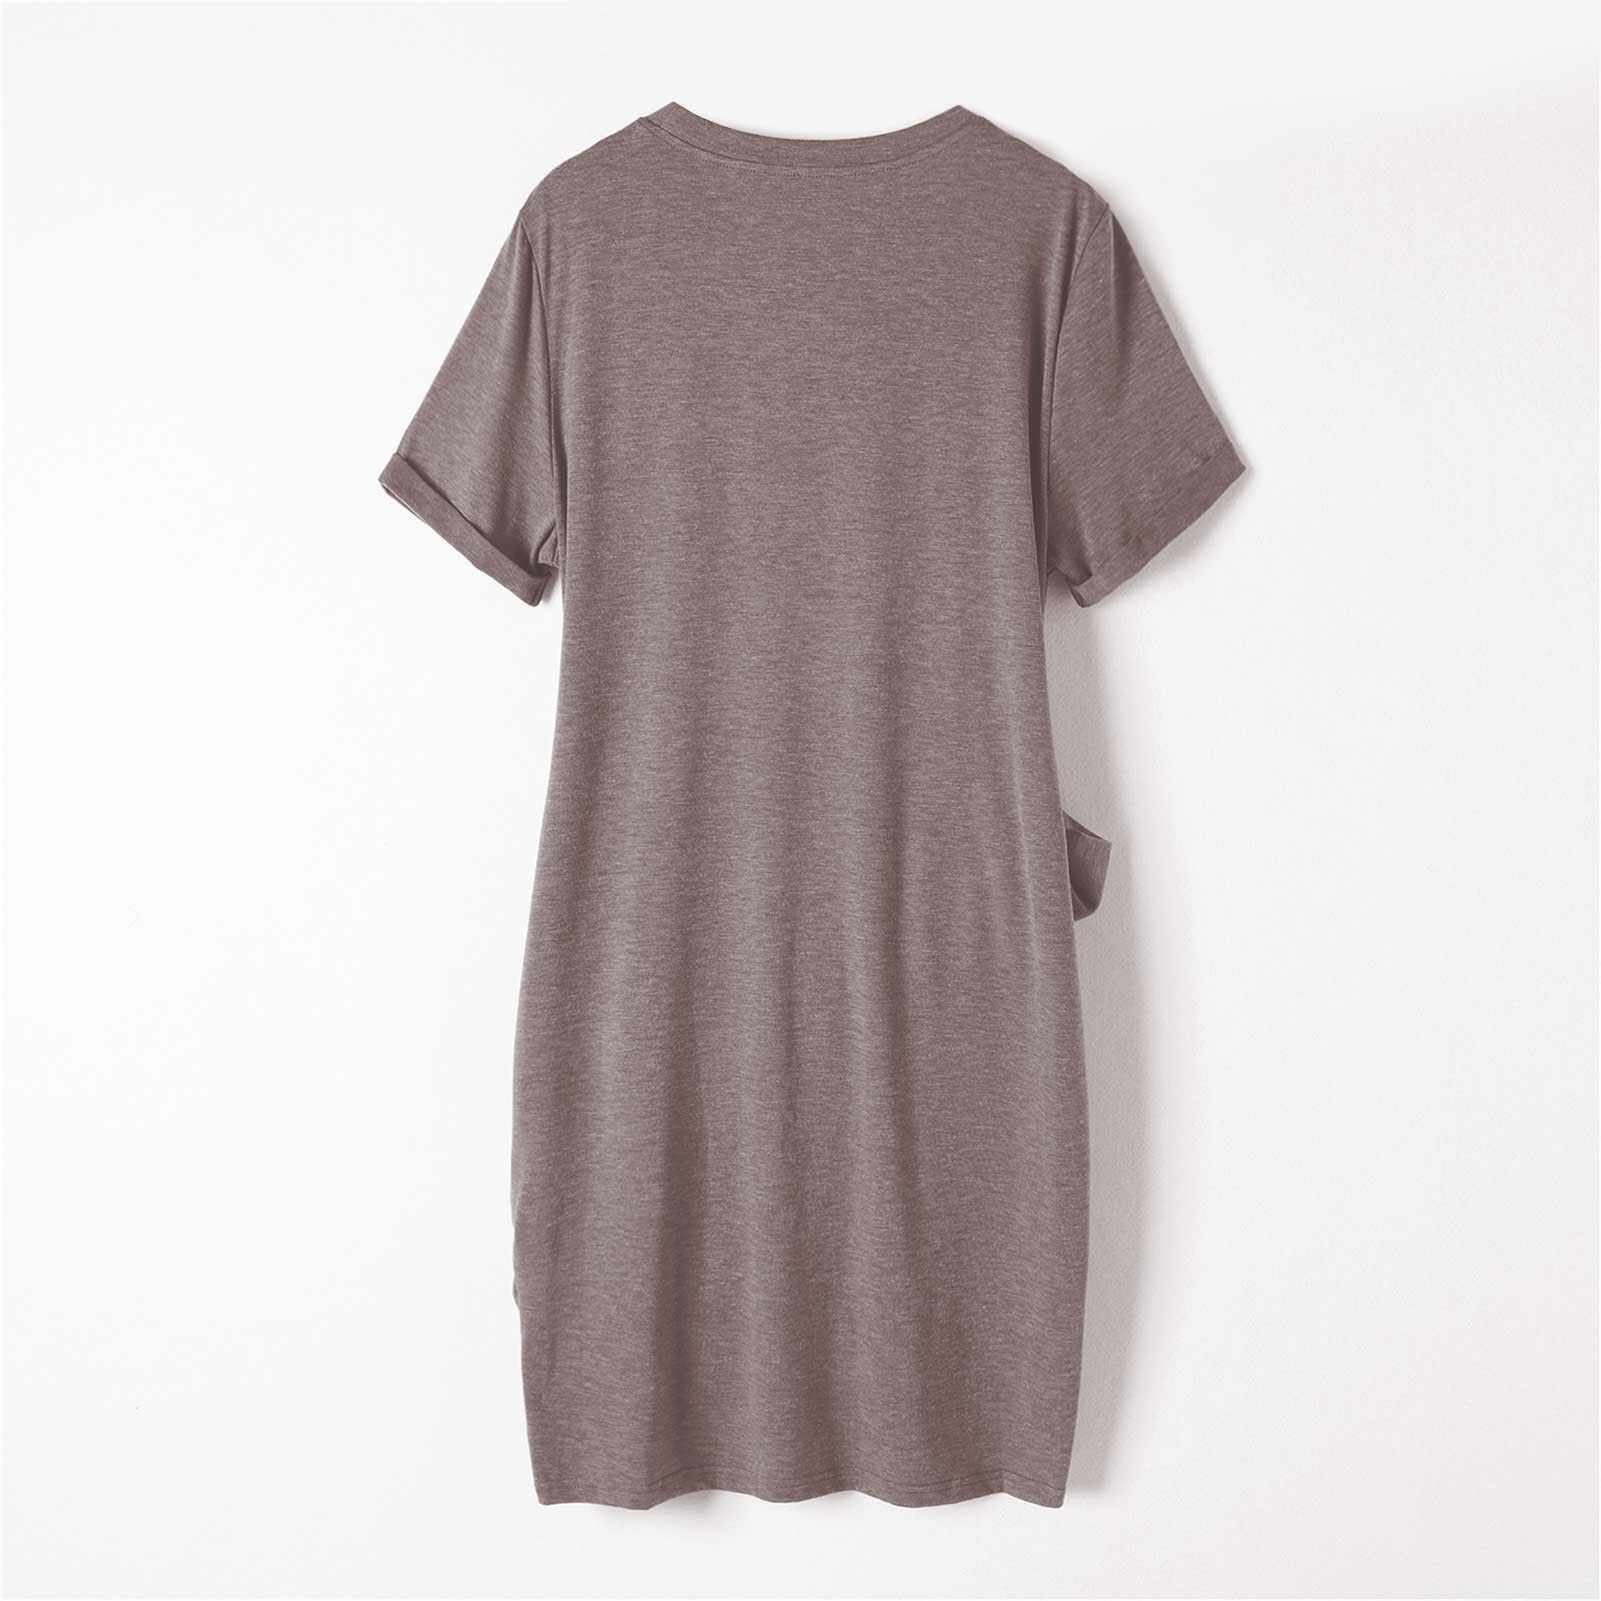 People's Choice Women Mini Dress Sashes Waist Short Sleeve O-Neck Solid Slim Casual T-Shirt Dress (Khaki)